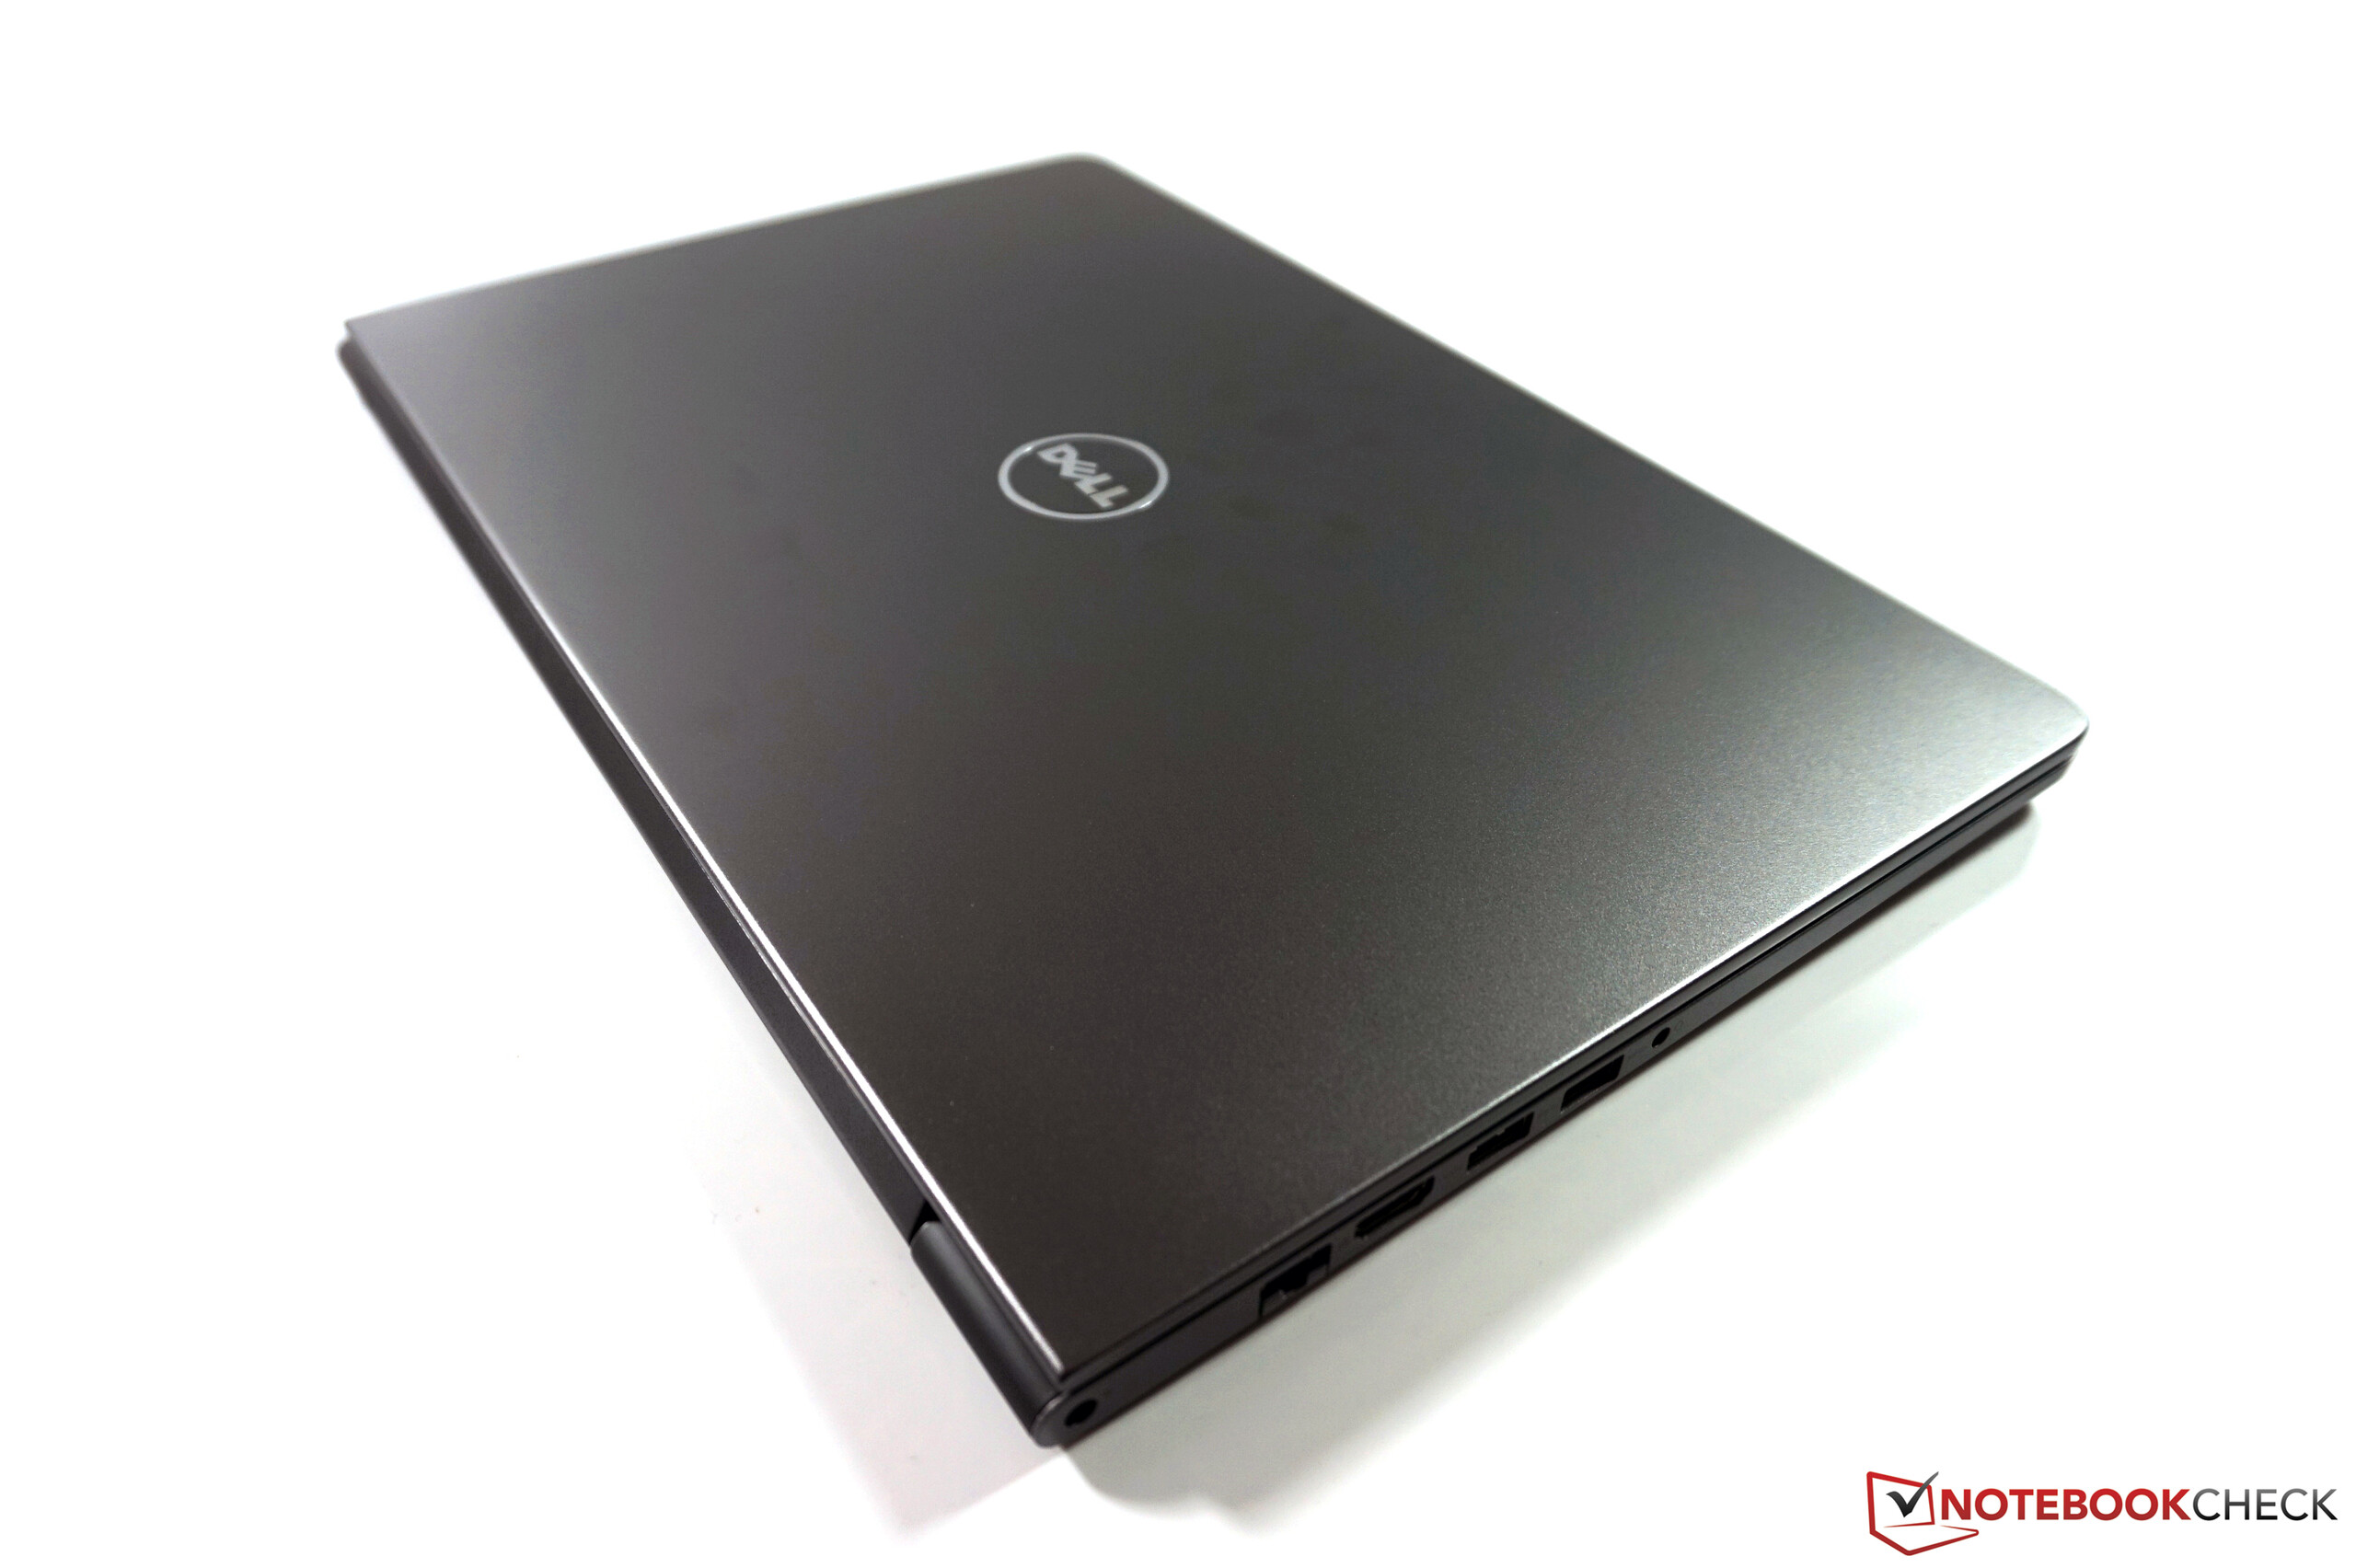 Dell Vostro 15 5568 (Core i5-7200U, Full-HD, 2017) Notebook Review